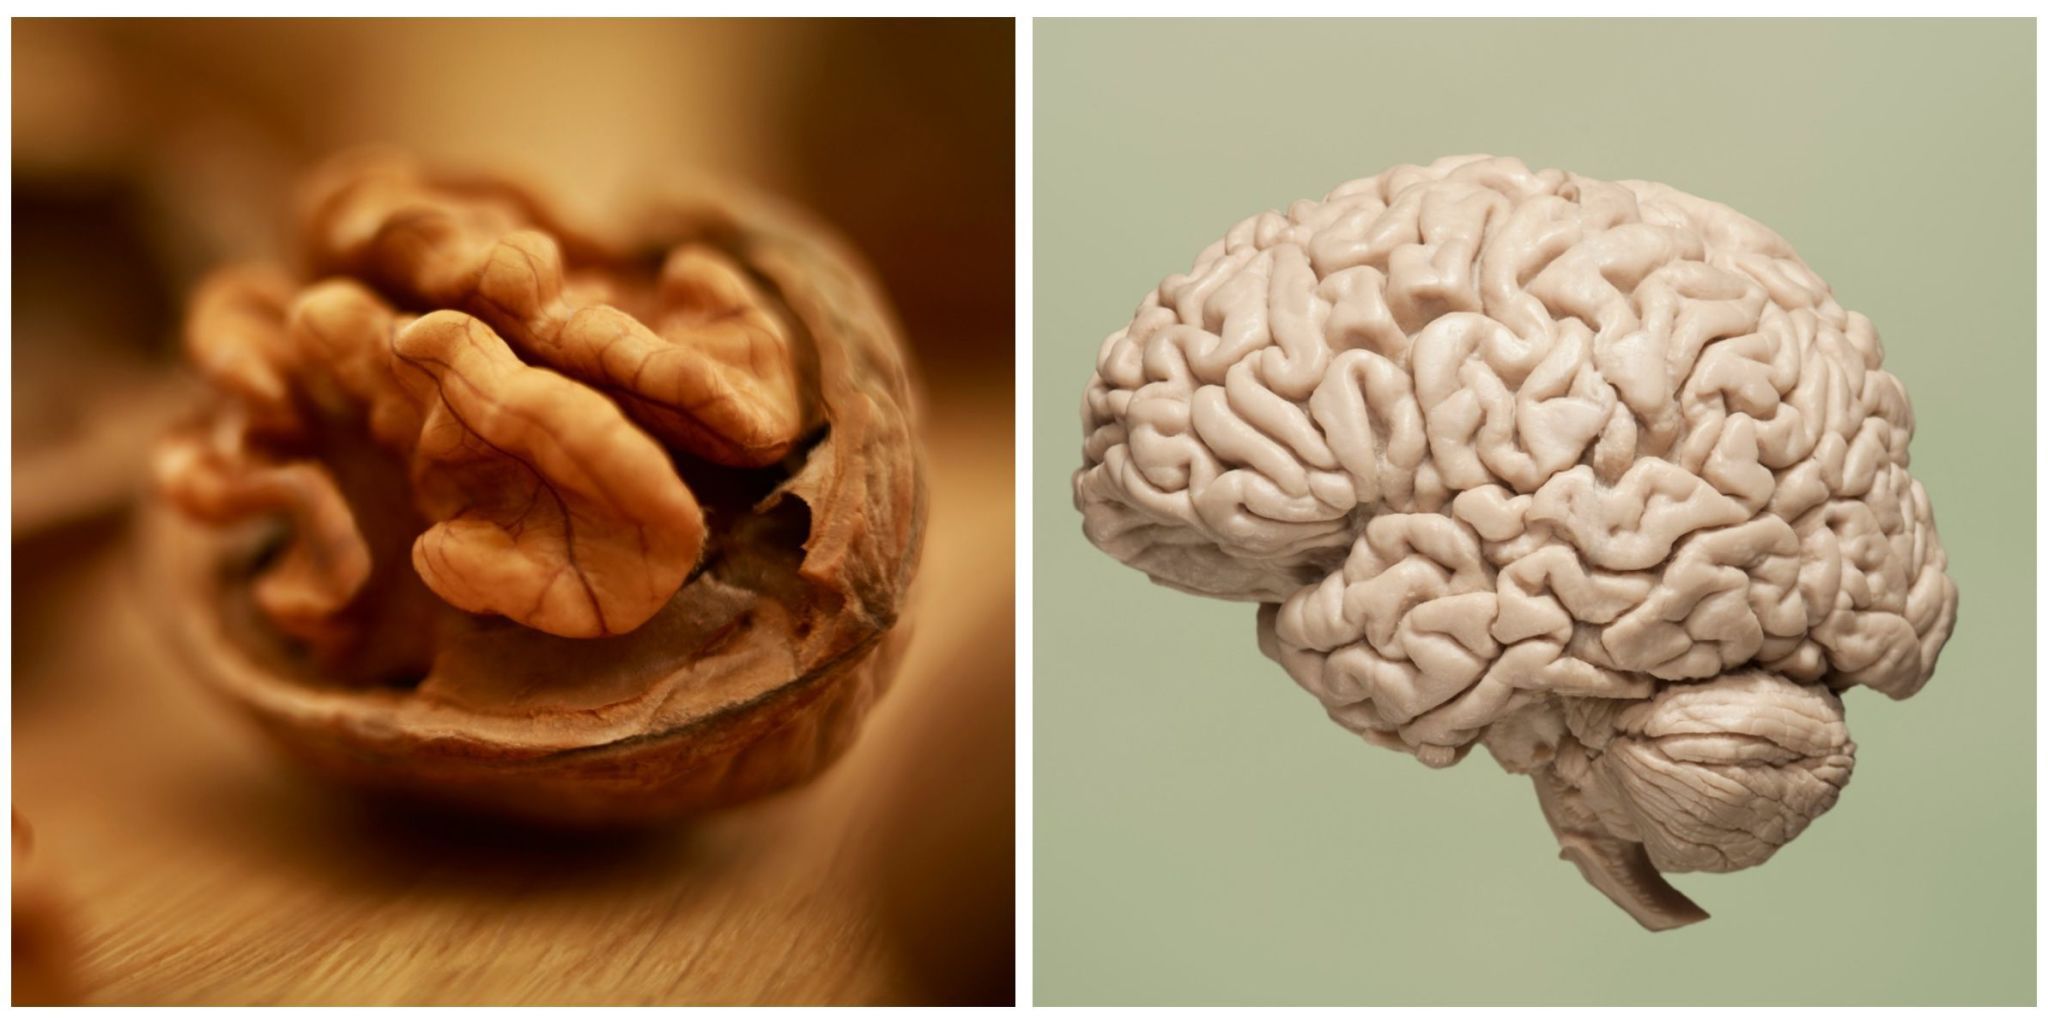 Грецкие орехи похожи на мозги. Грецкий орех и мозг. Орех похожий на мозг. Грецкий орех и мозг человека. Грецкий орех похож на мозг.